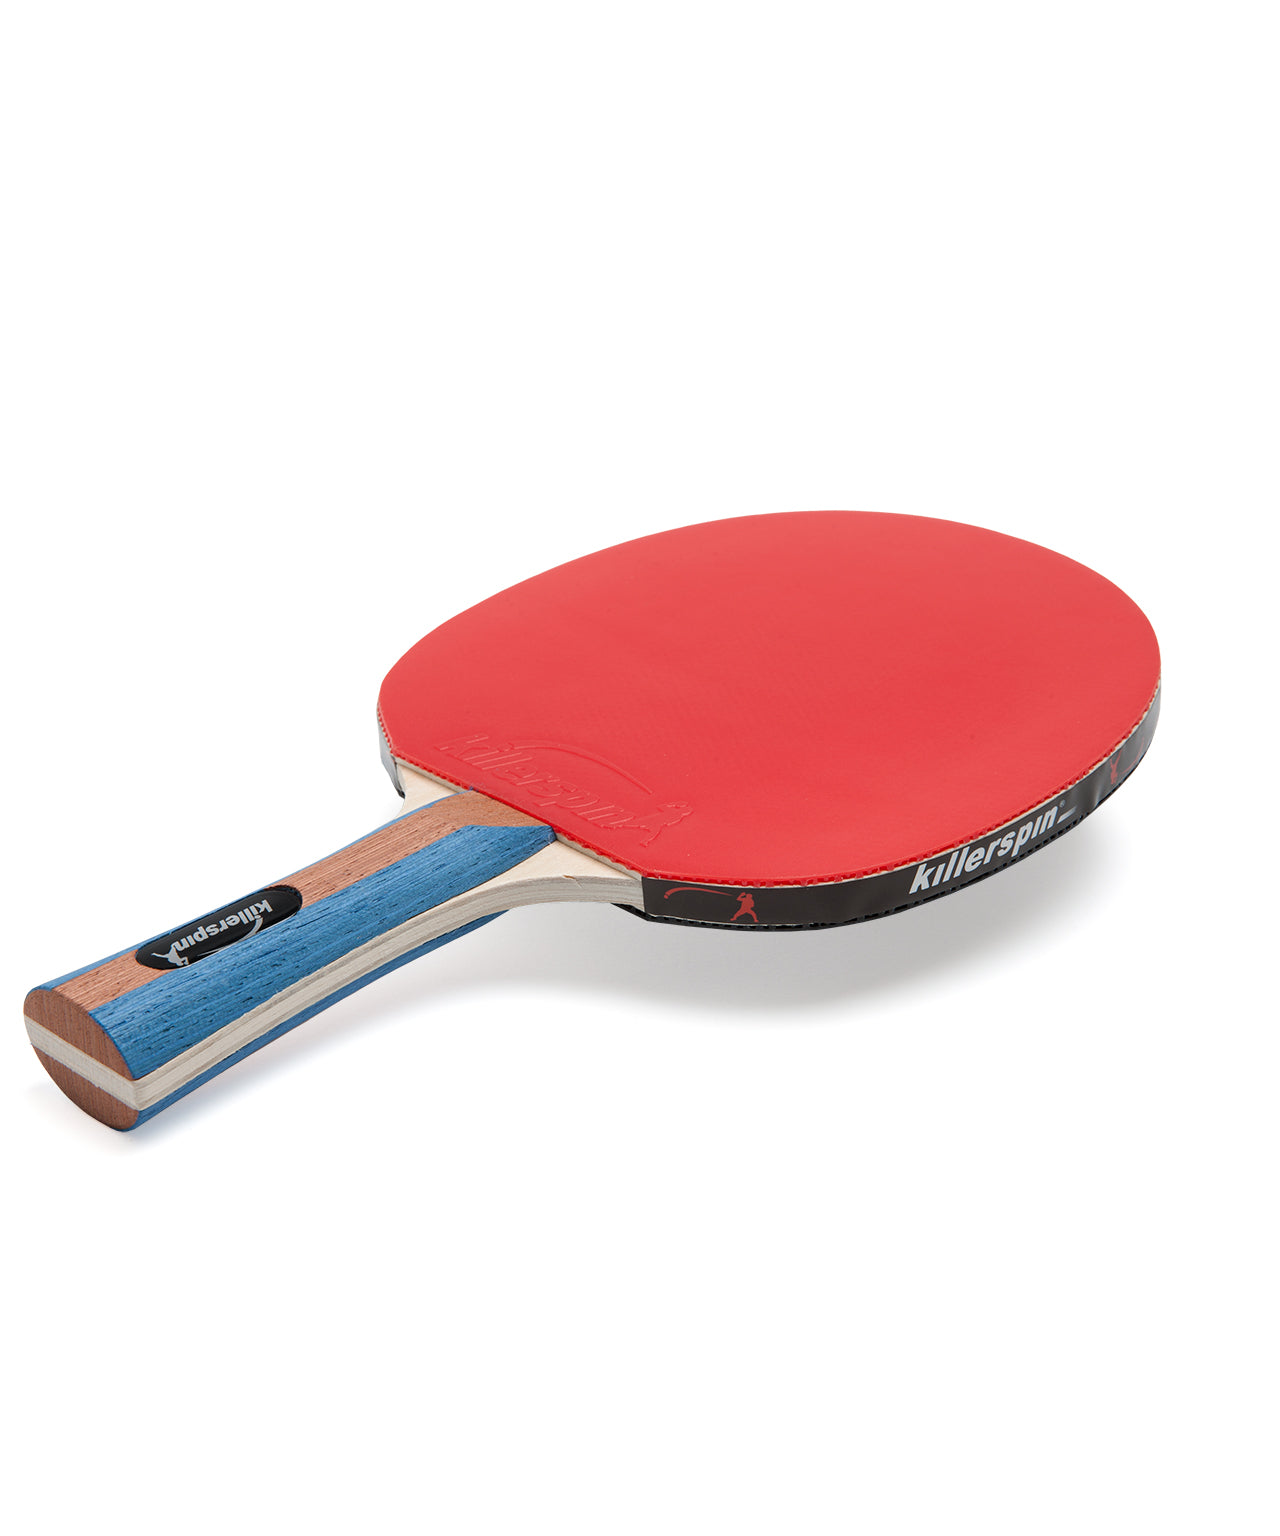 Killerspin Ping Pong Paddle Set JetSet2 - Red Rubber